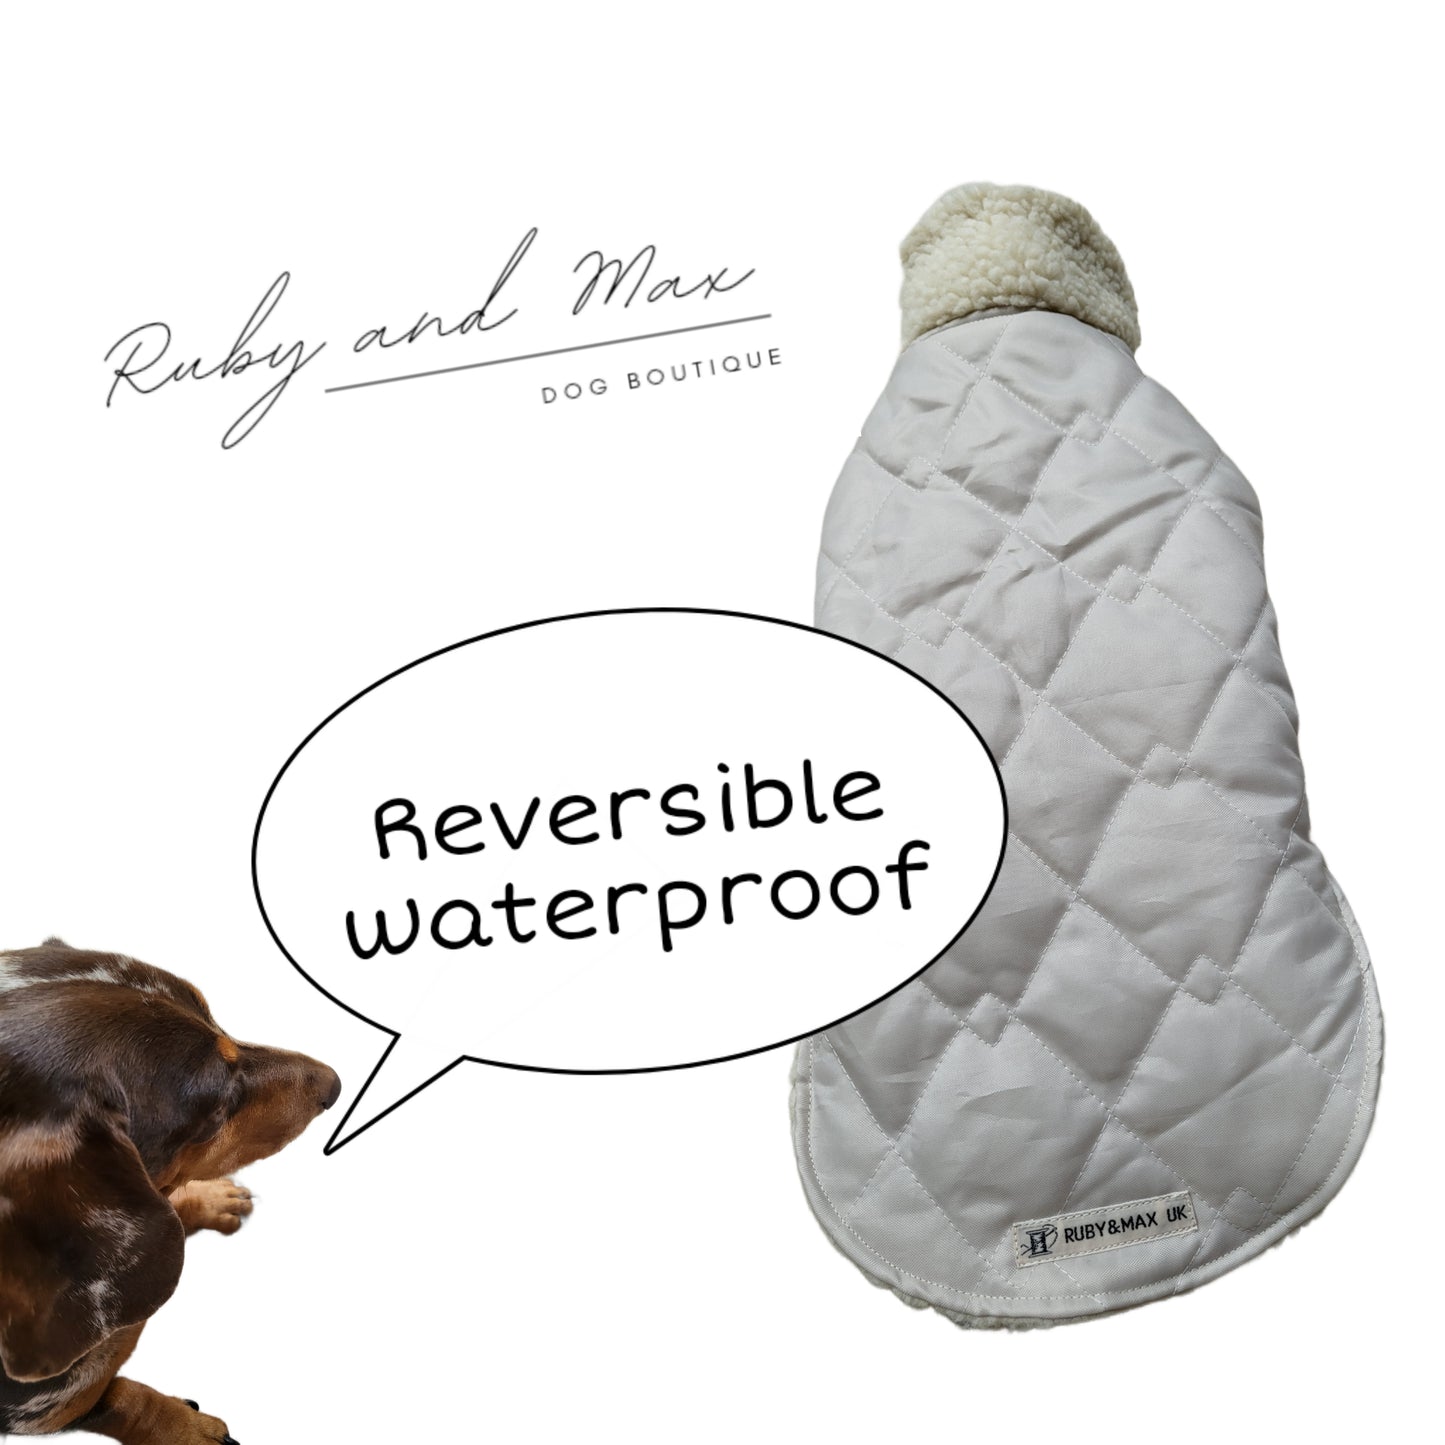 Dachshund Miniature Waterproof Reversible Coat